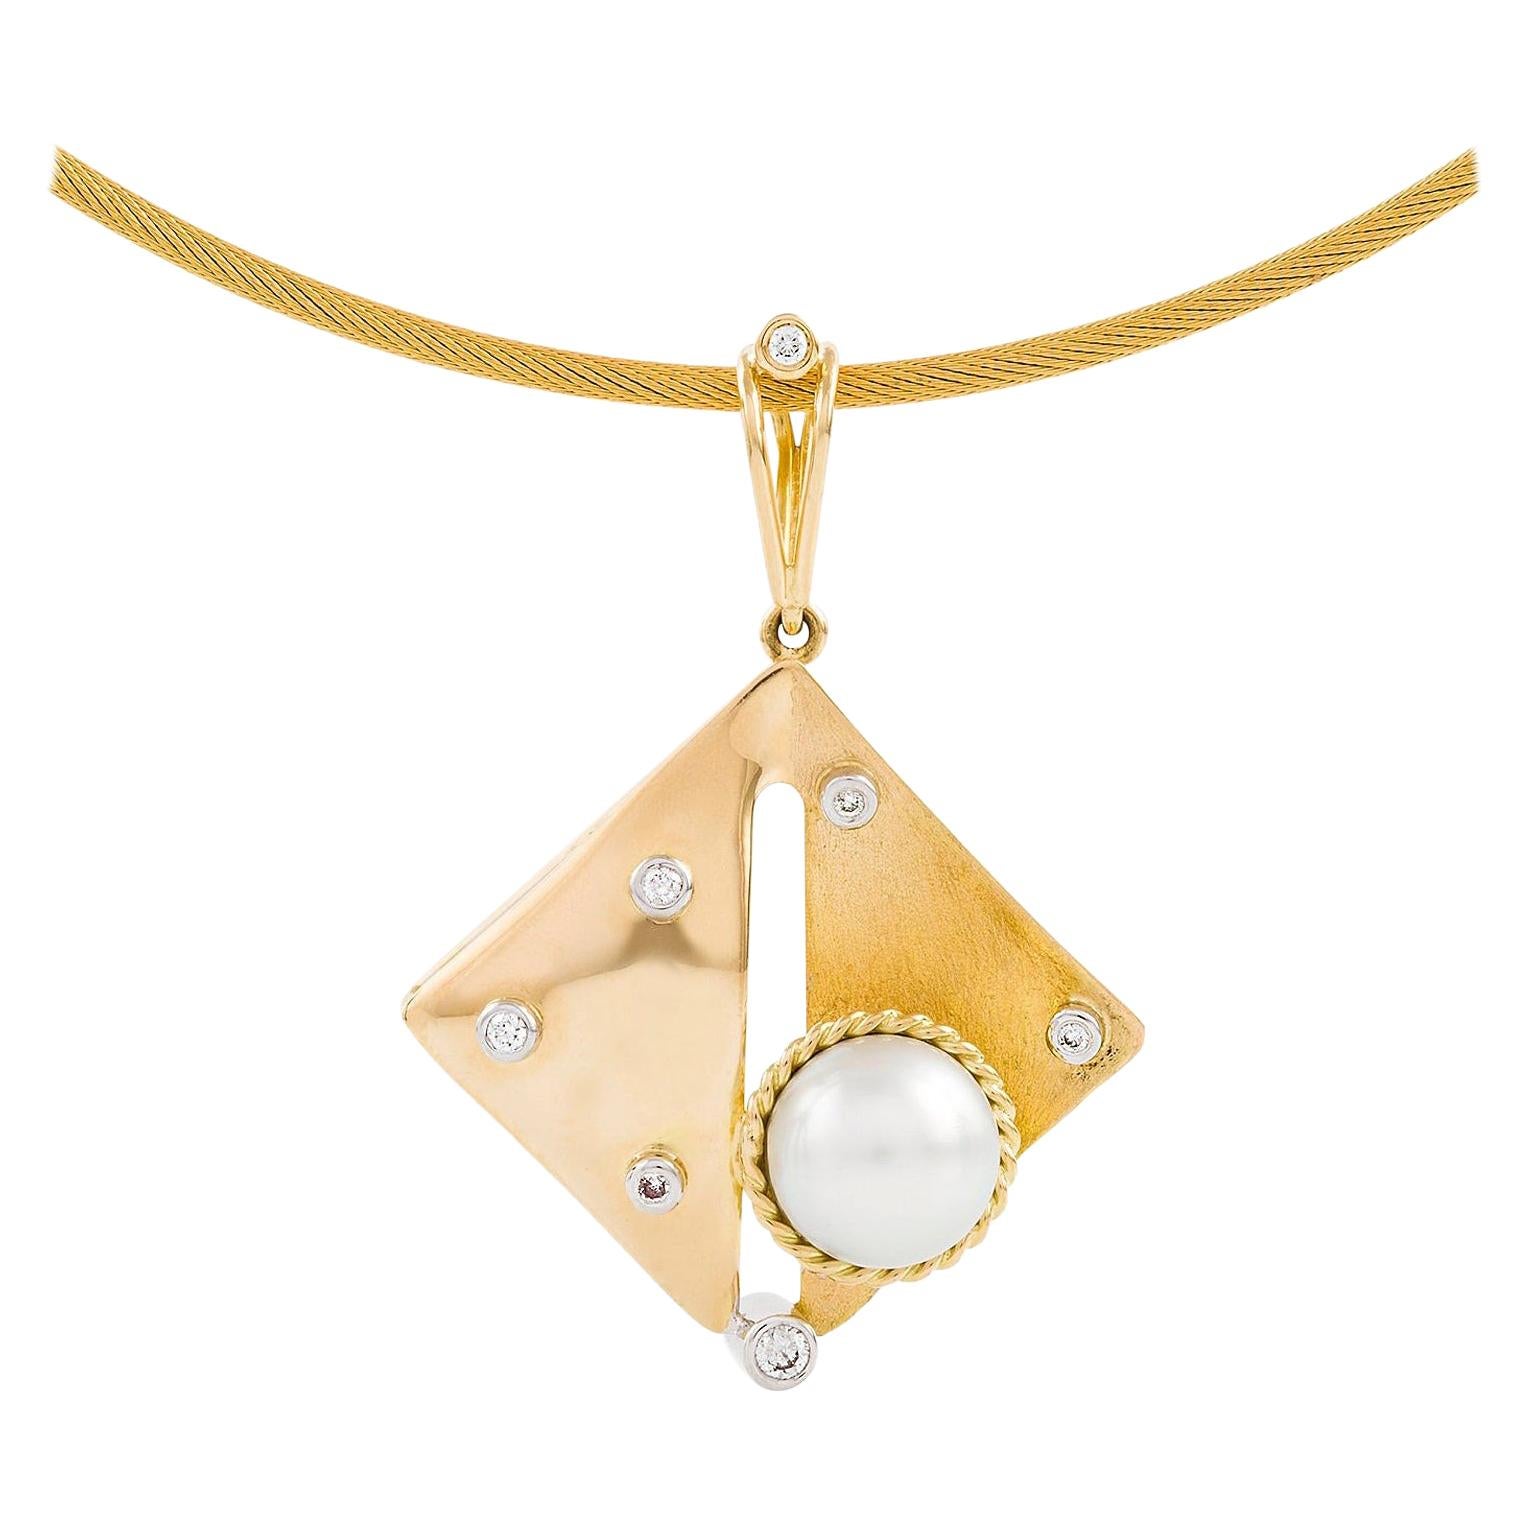 Kian Design South Sea White Pearl and Diamond Necklace in 18 Carat Gold